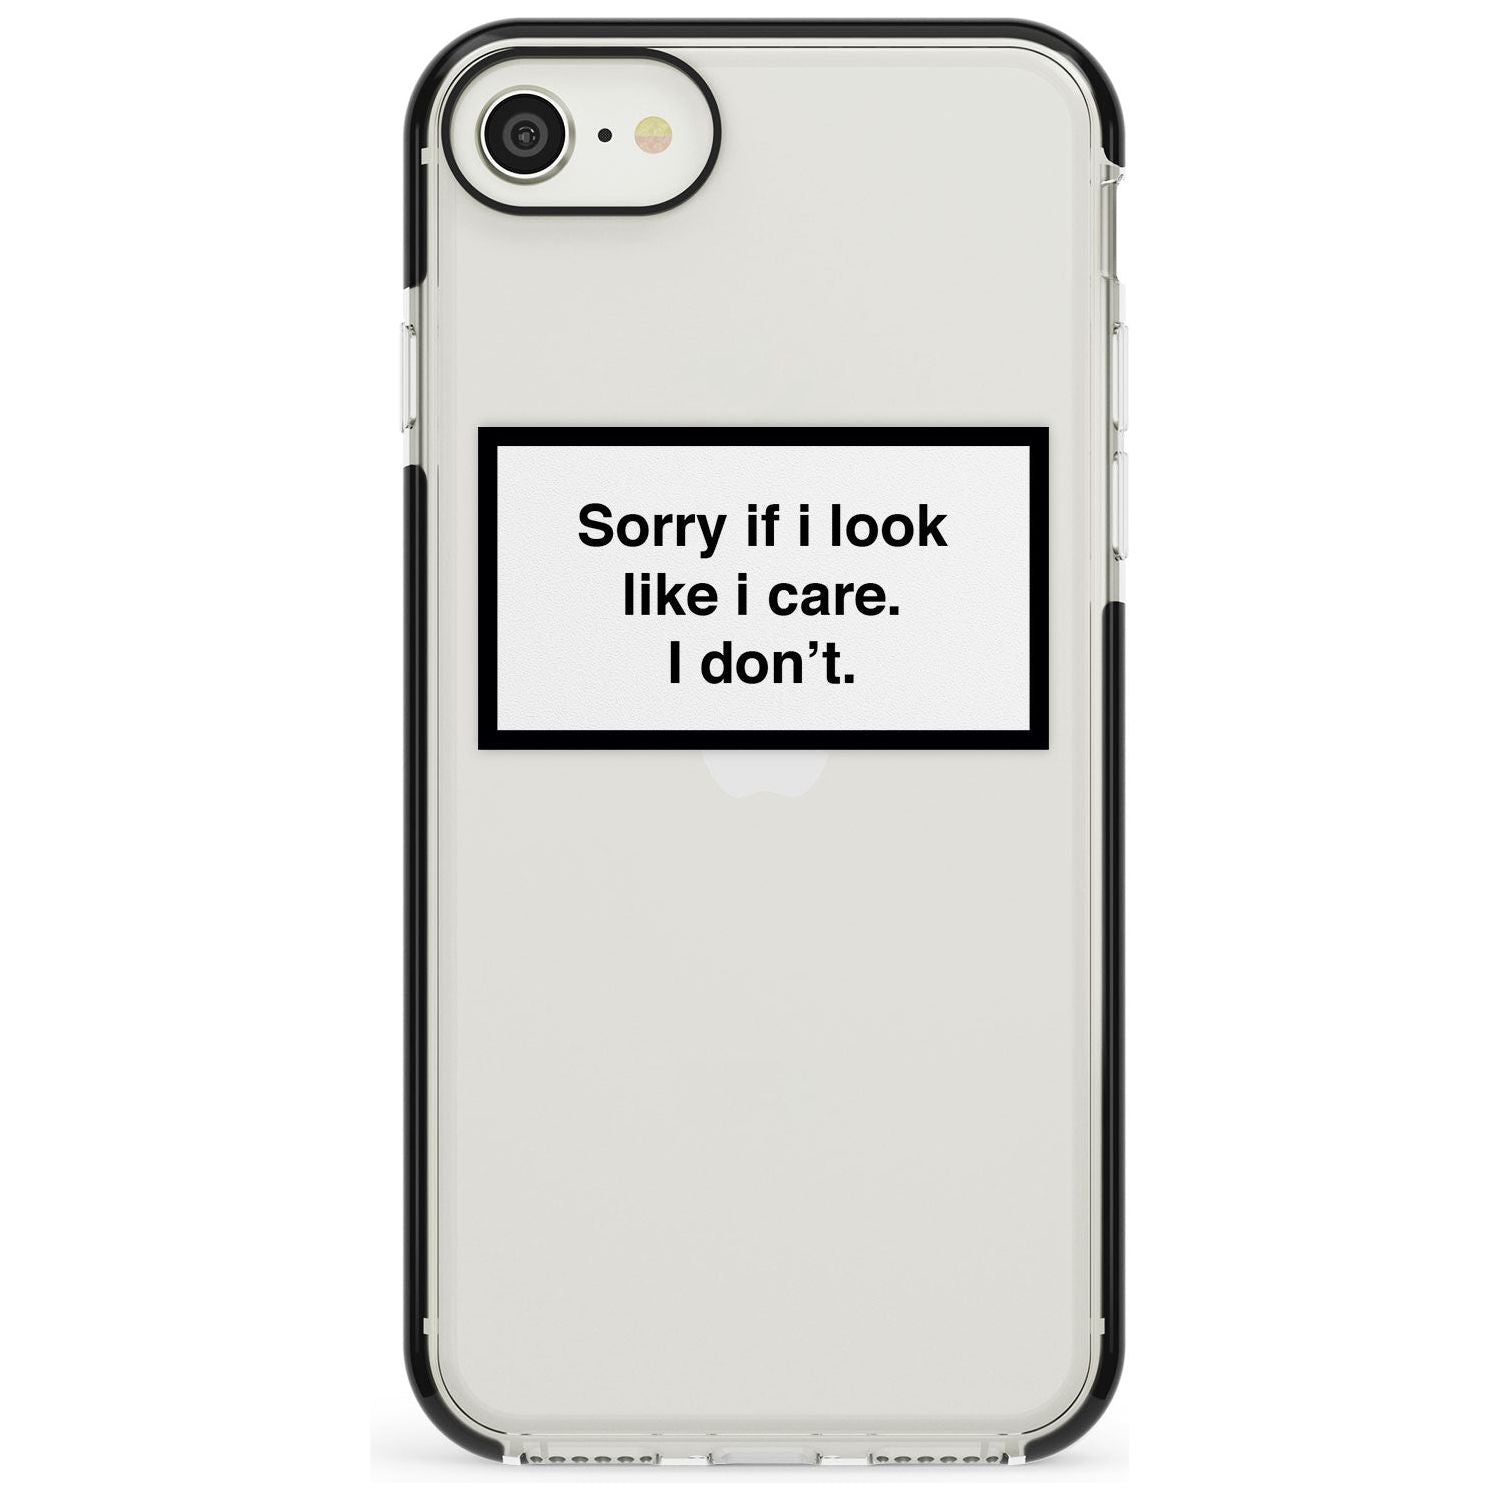 'Sorry if it looks like I care' iPhone Case  Black Impact Phone Case - Case Warehouse